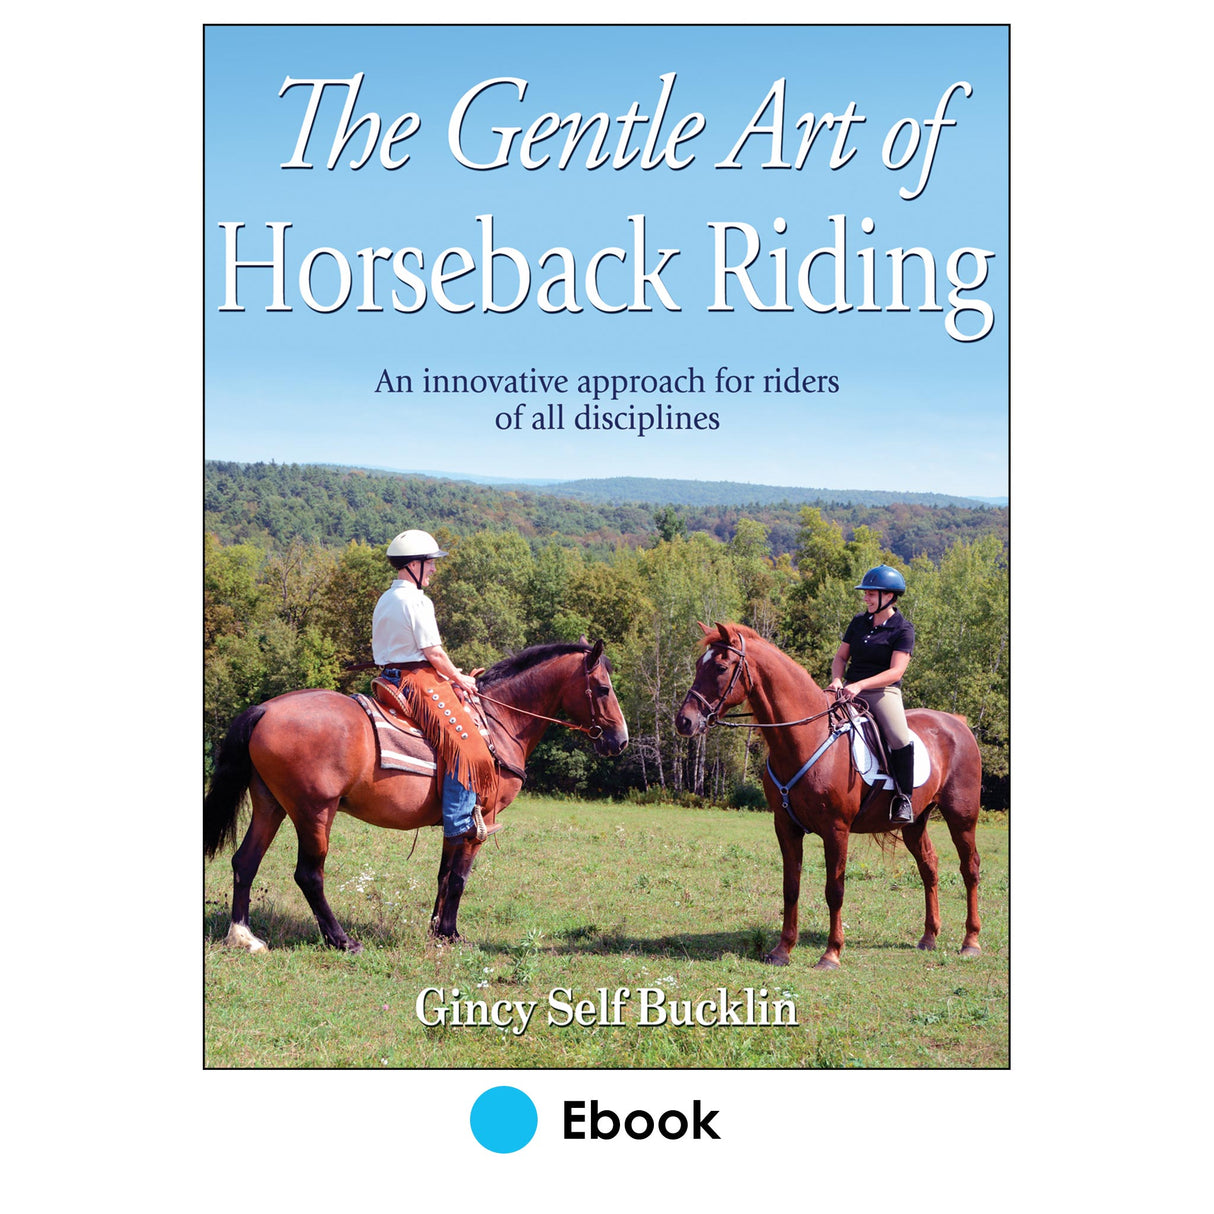 Gentle Art of Horseback Riding PDF, The